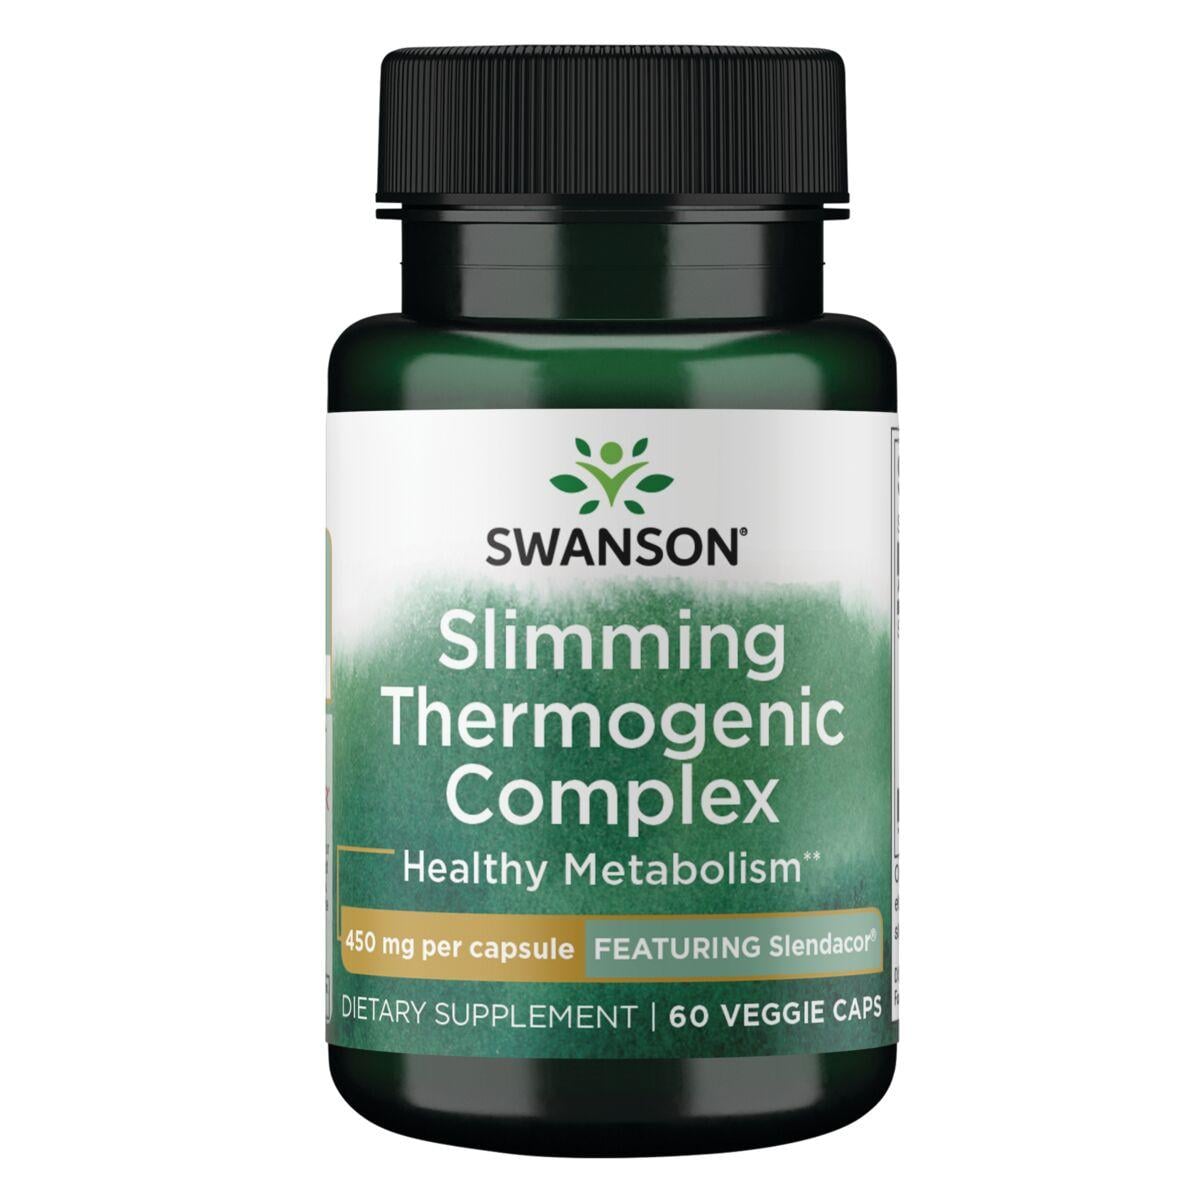 Swanson Premium Slimming Thermogenic Complex - Featuring Slendacor Vitamin 450 mg 60 Veg Caps Weight Management